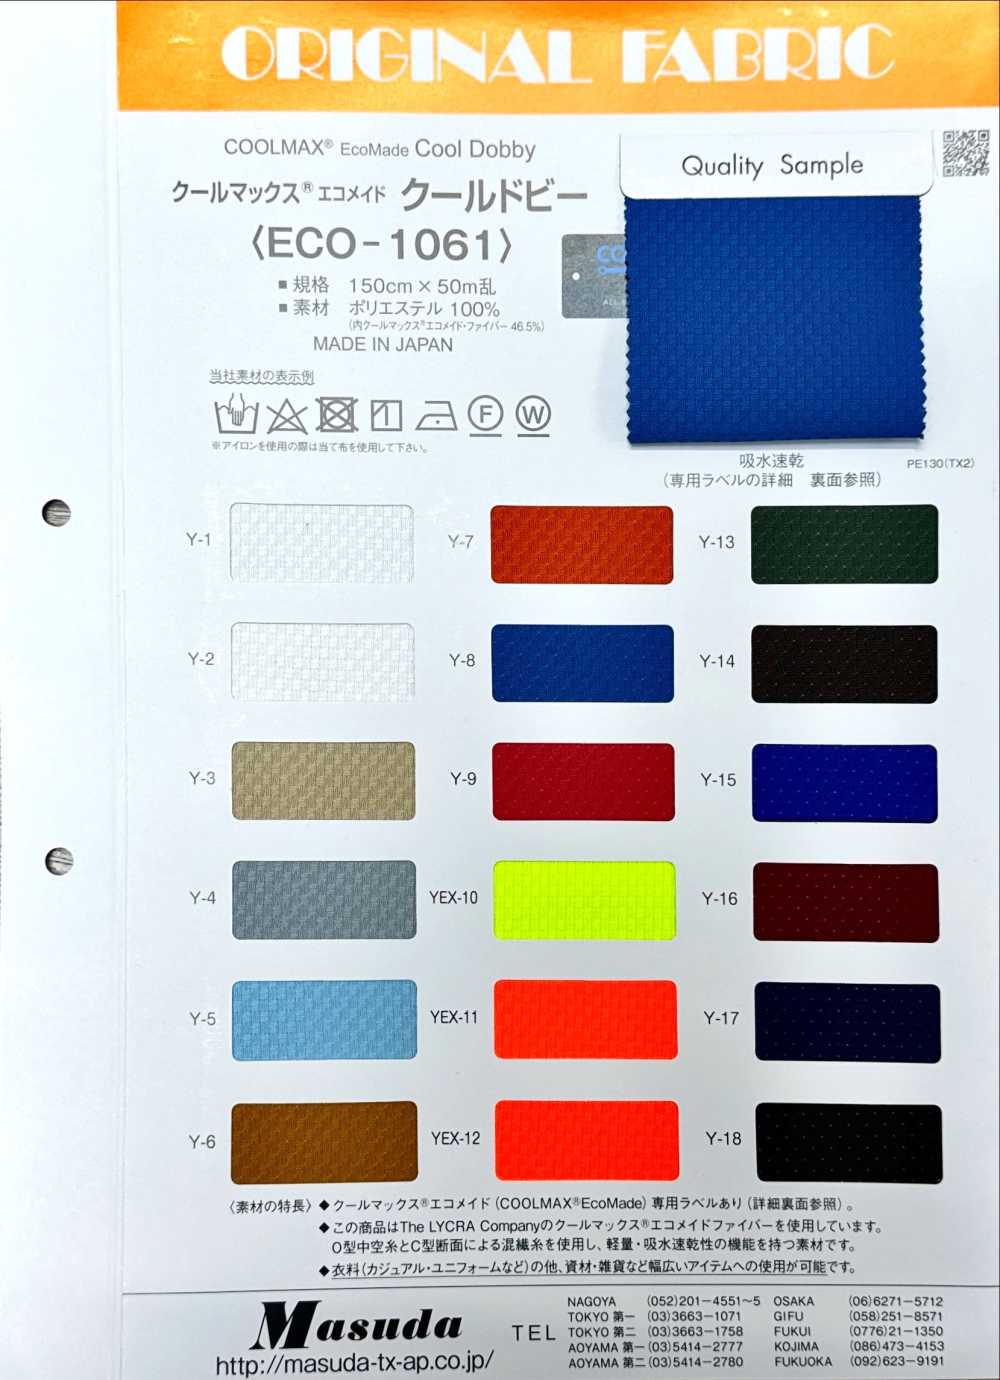 ECO-1061 Coolmax® Ecomade Cool Dobby[Fabrication De Textile] Masuda